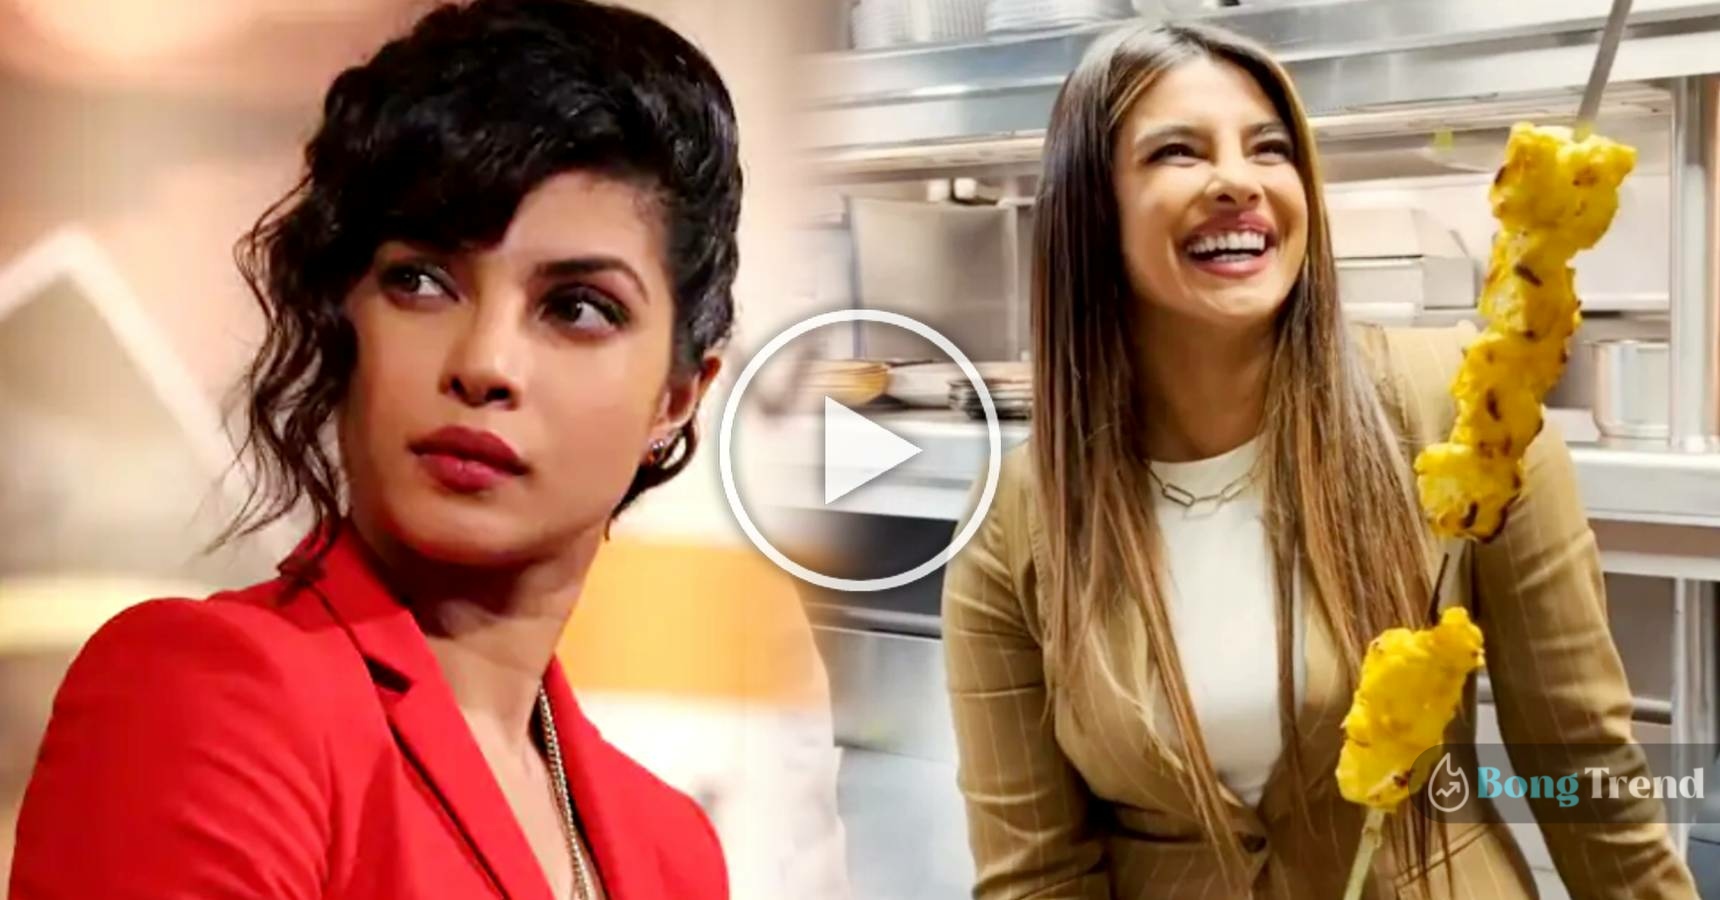 Priyanka Chopra shared a video from her SONA restaurant kitchen